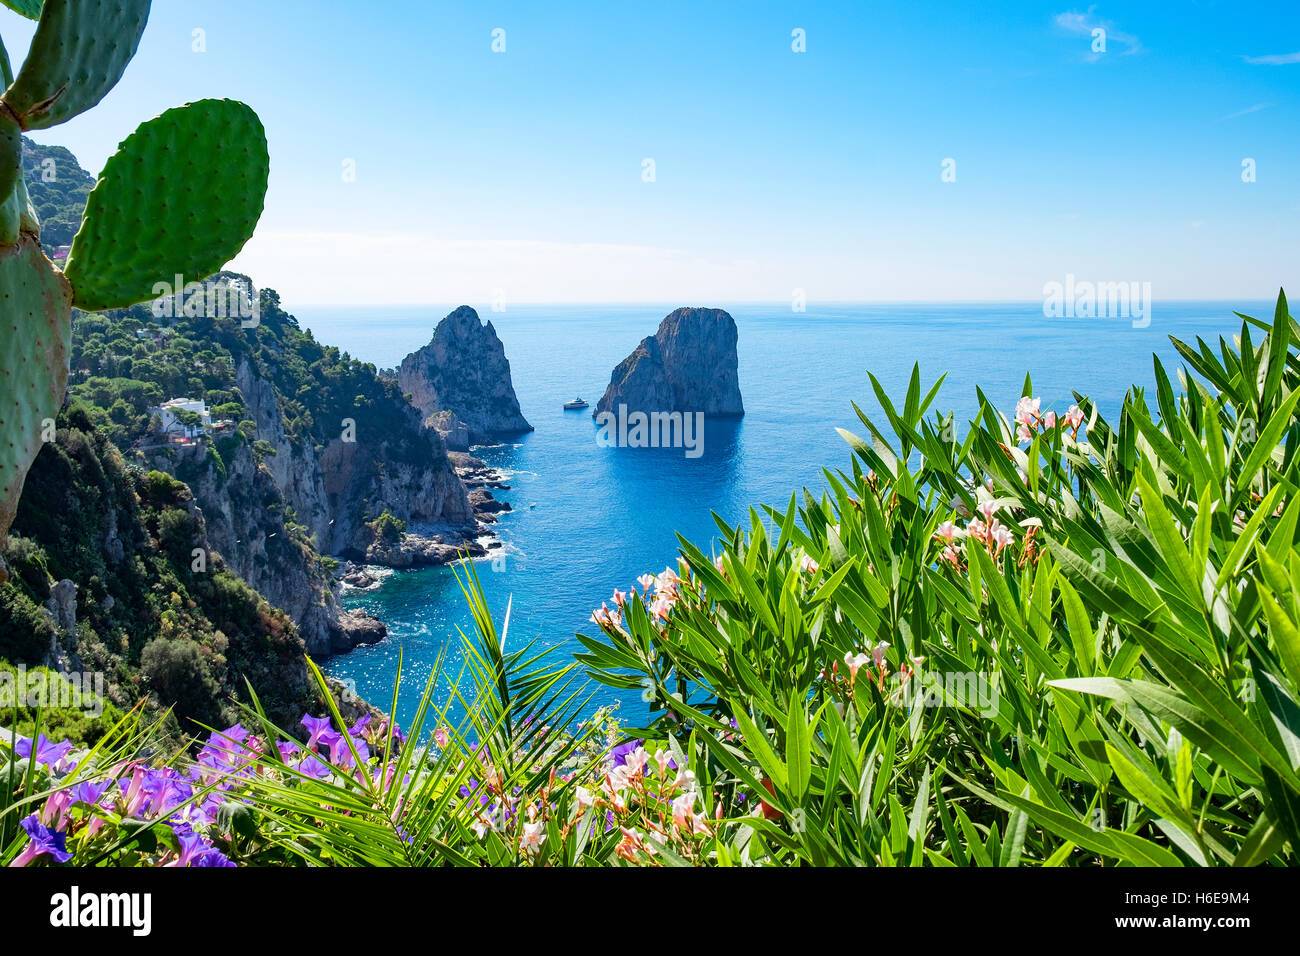 Faraglioni rocks, viewed from Augustus gardens on the island of Capri, Italy. Stock Photo